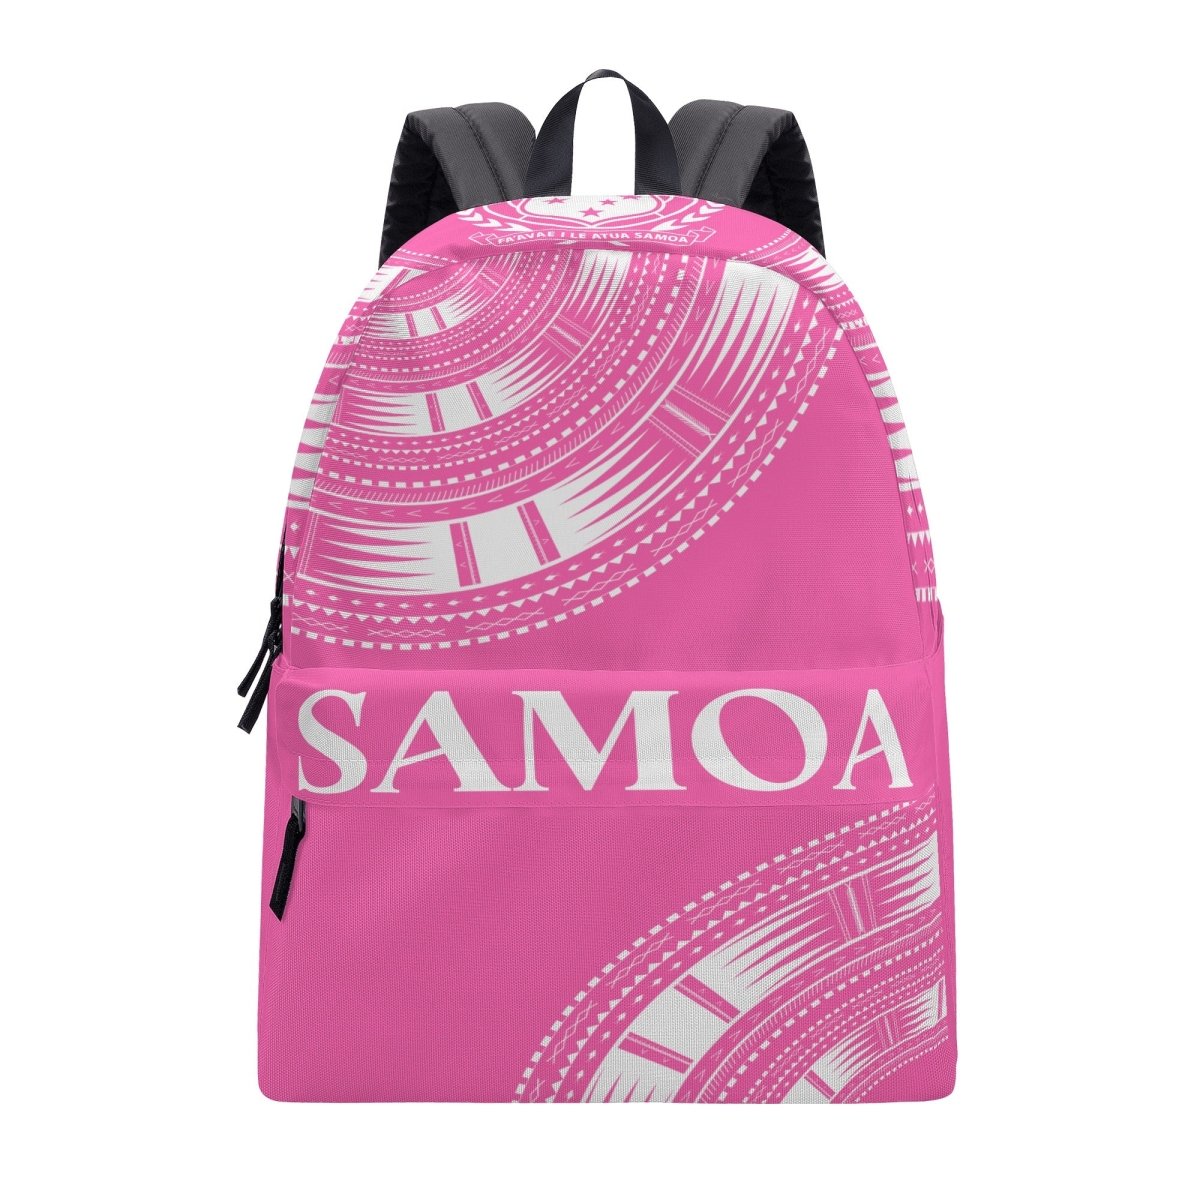 Samoa Backpack Pink - Nesian Kulture